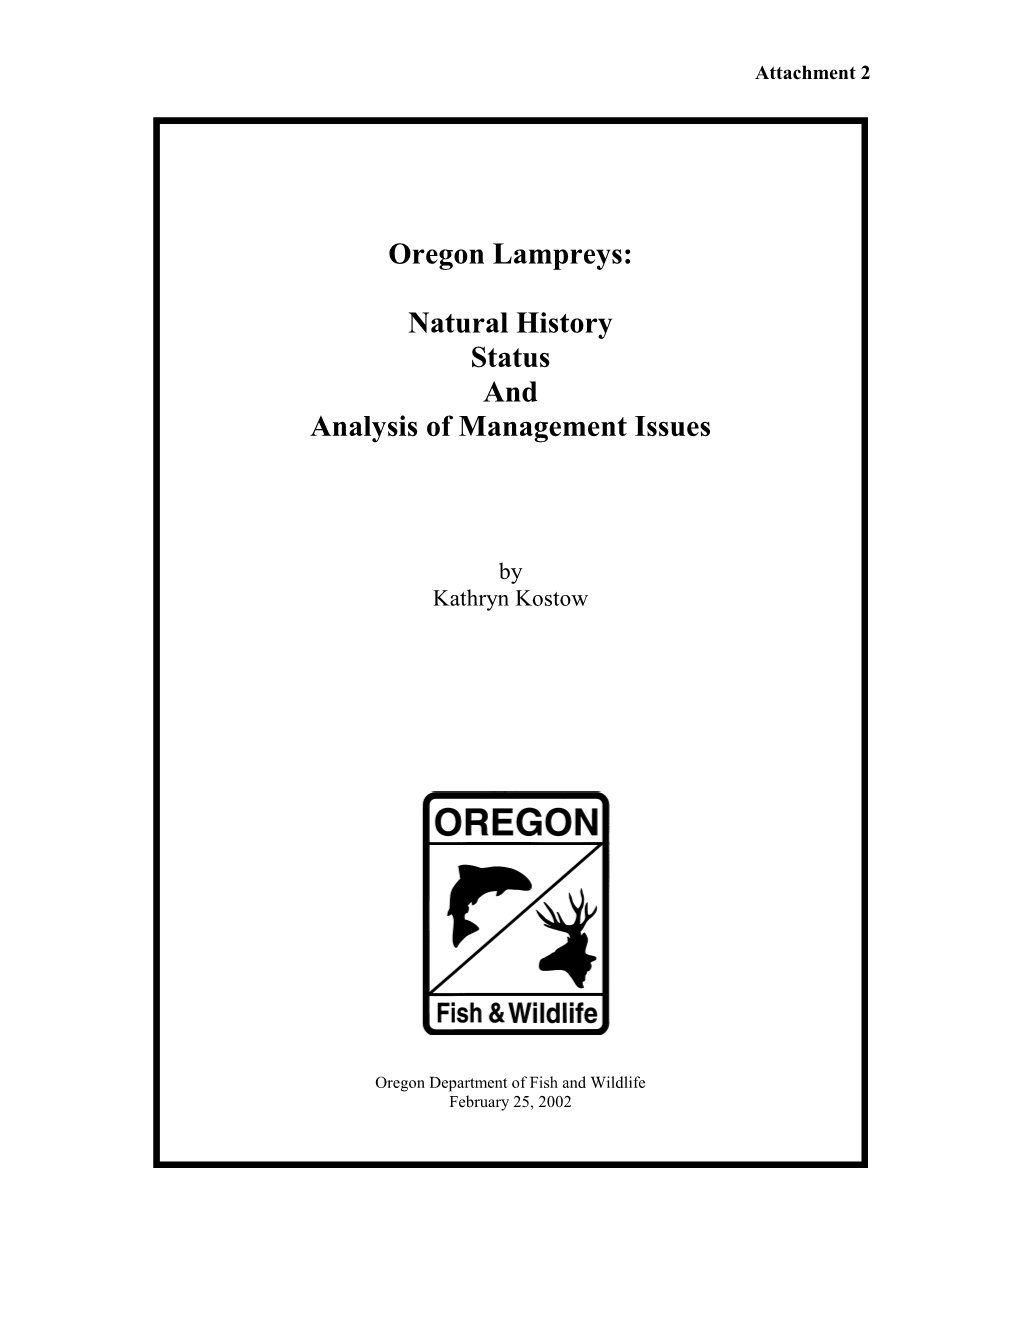 Oregon Lampreys: Natural History Status and Analysis Of